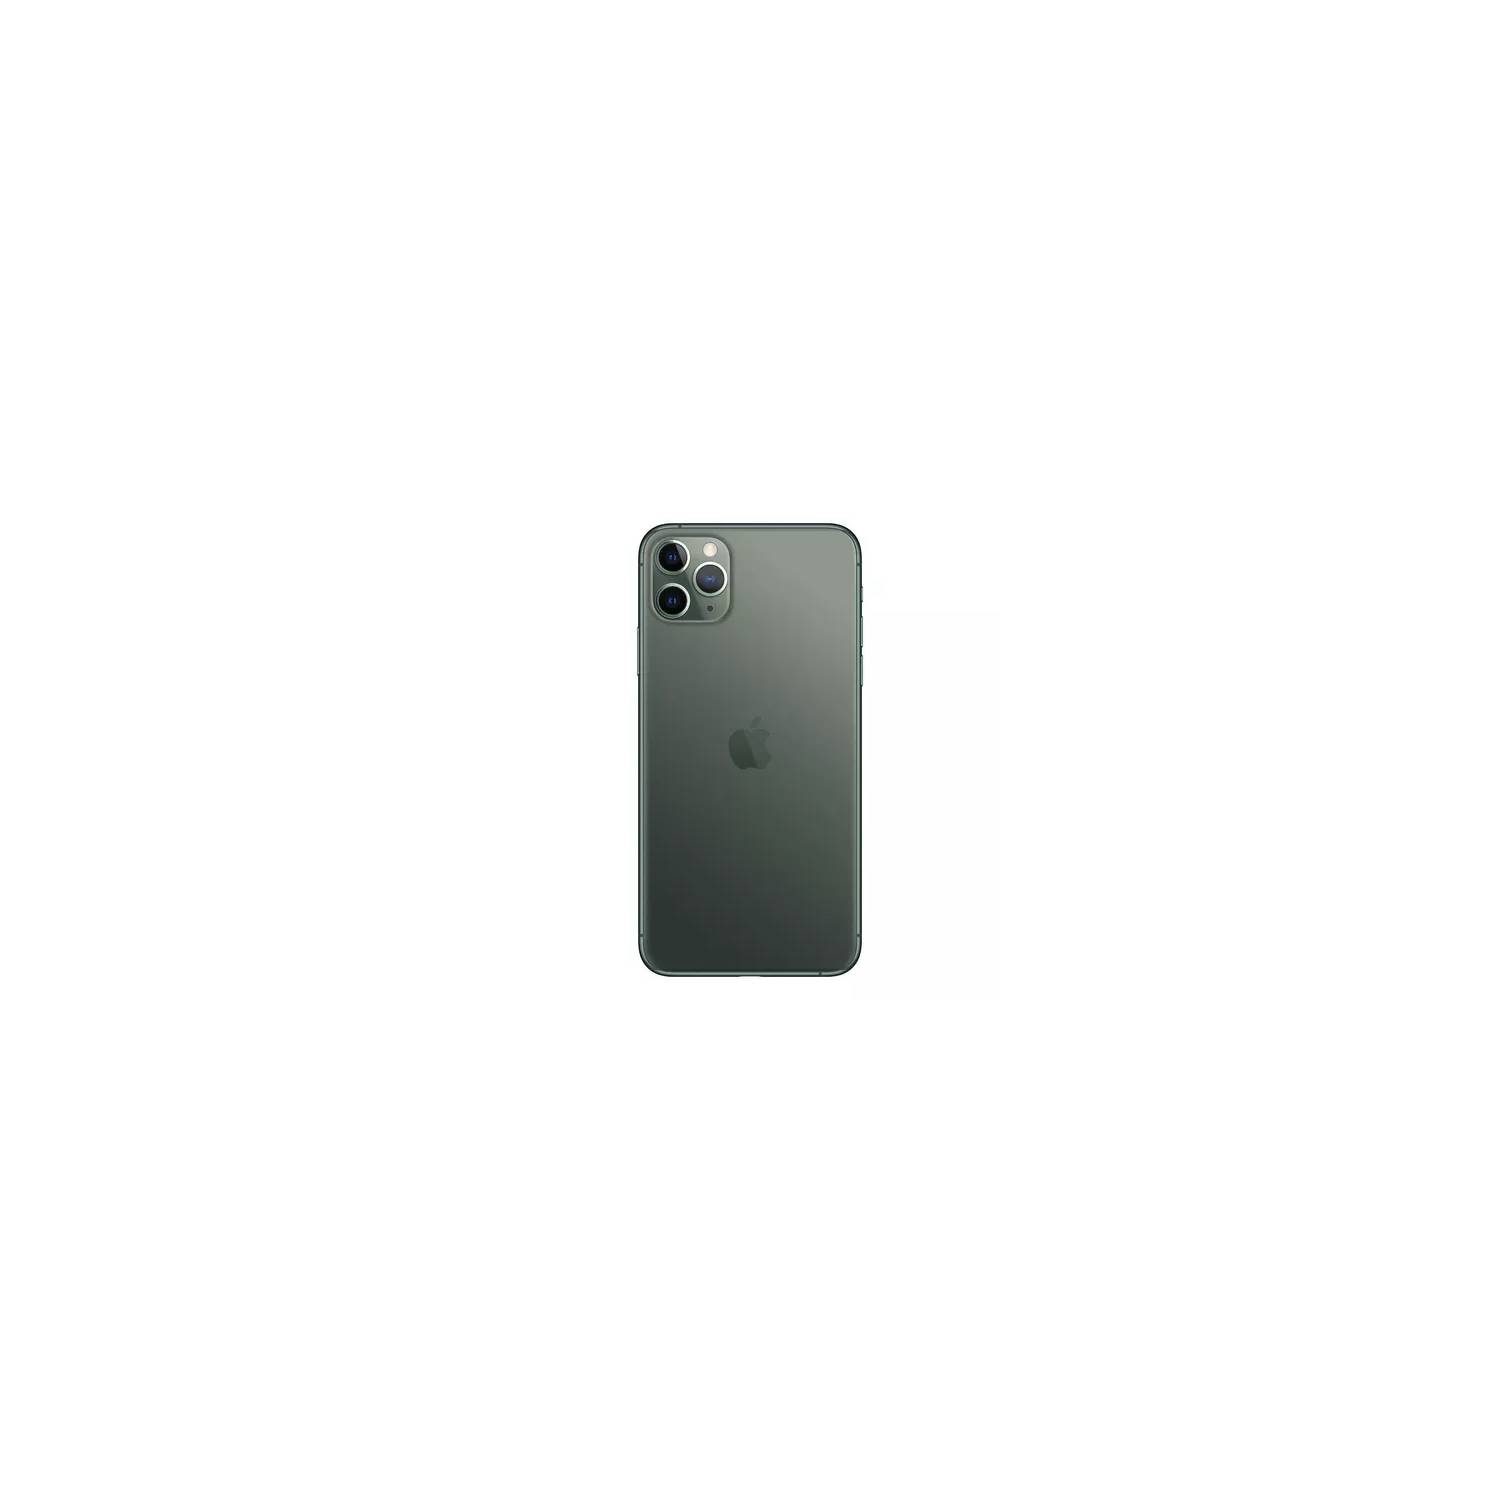 APPLE iPhone 11 Pro 64GB - Plata - Reacondicionado